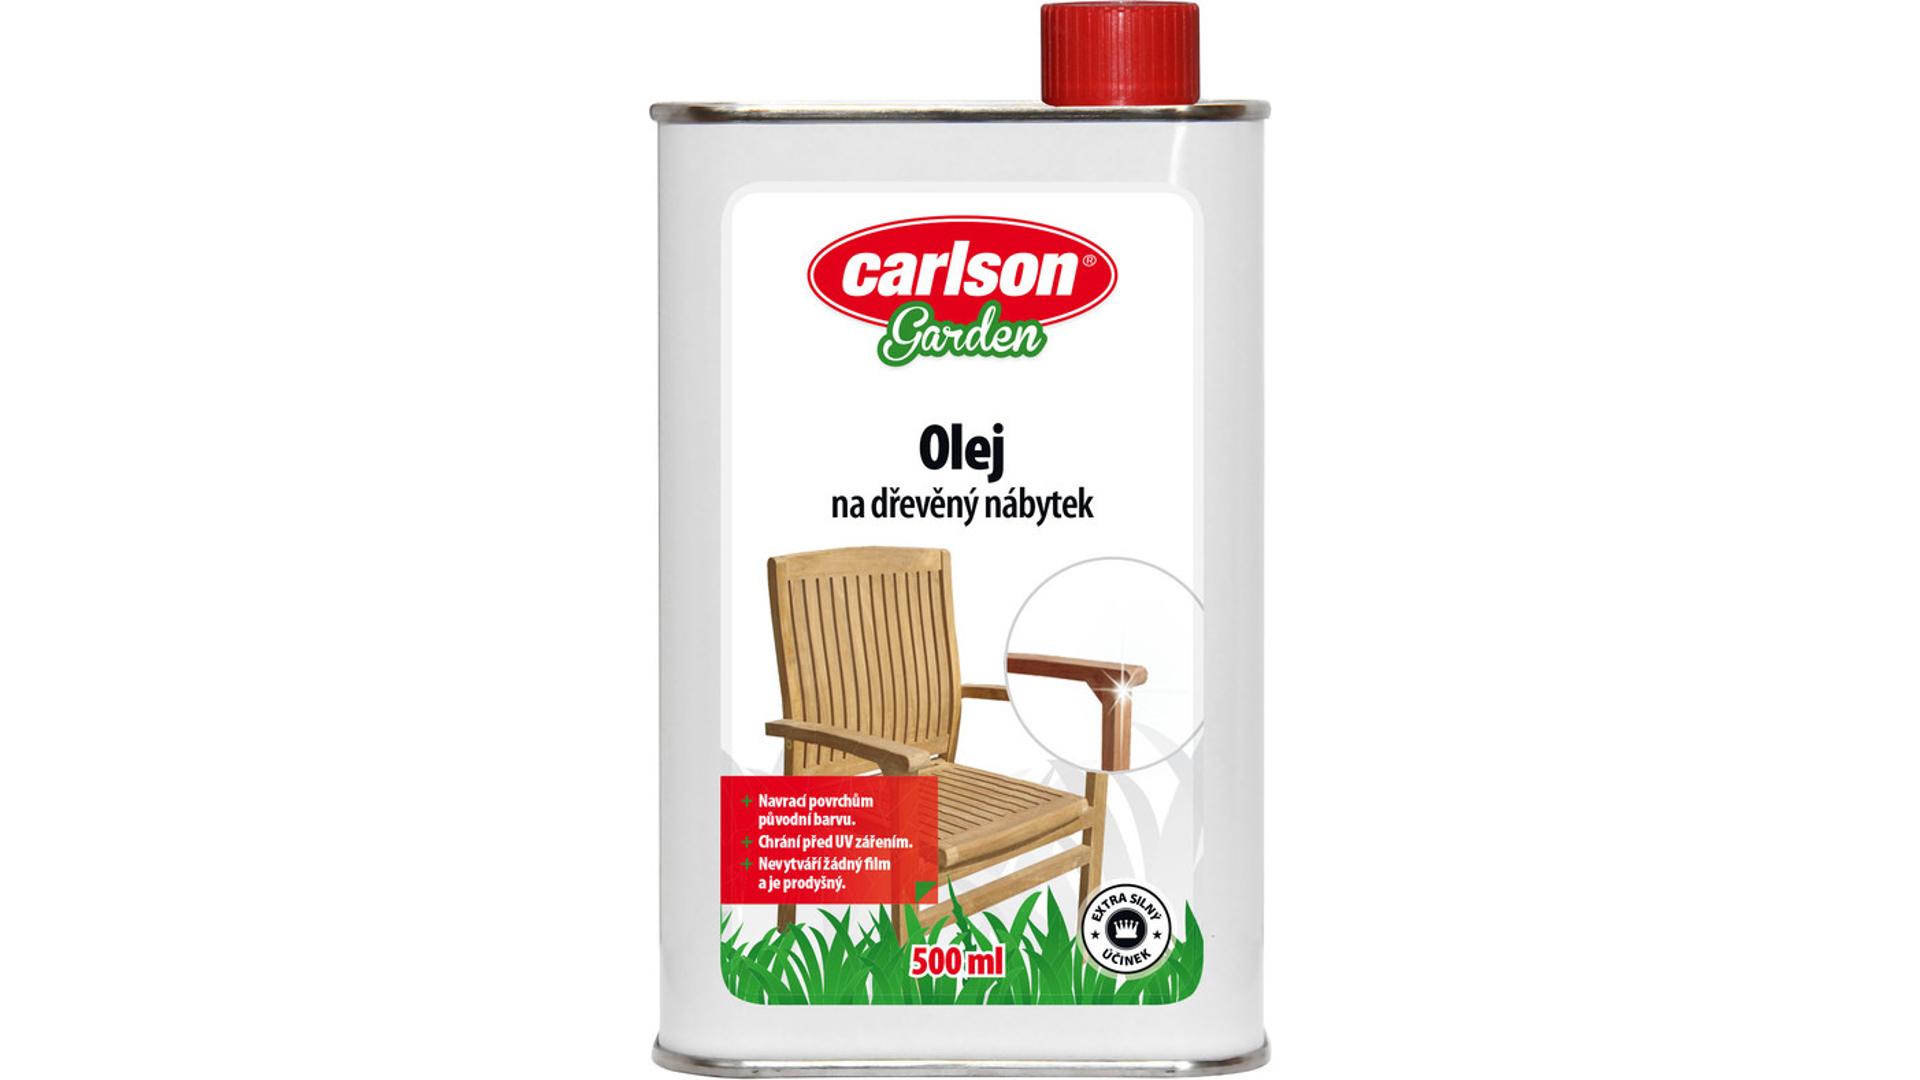 CARLSON olej na dřevěných nábytek 500ml